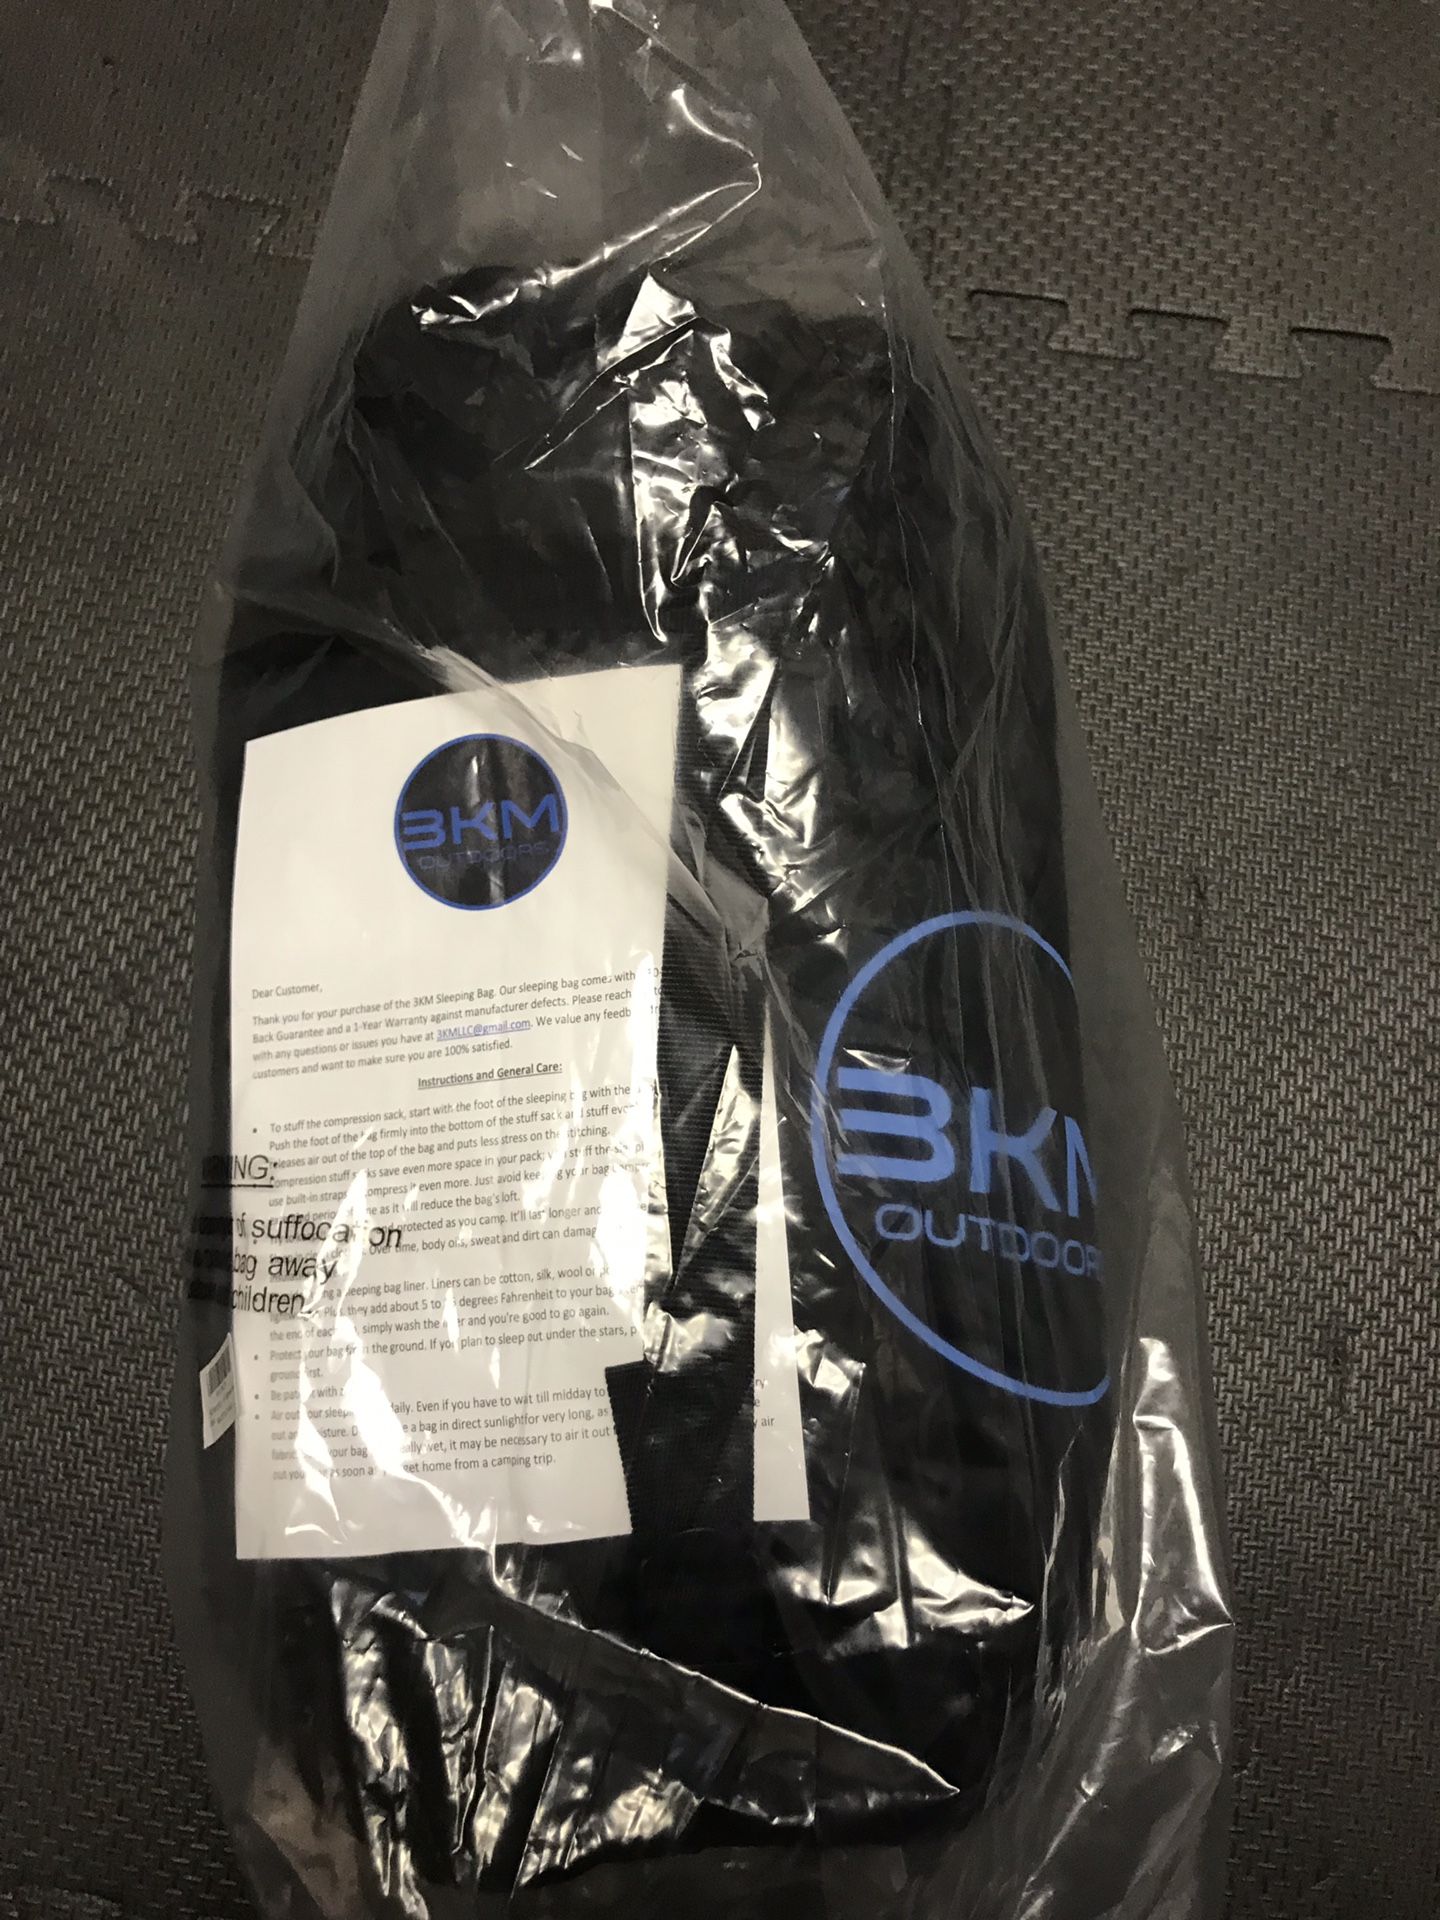 Brand new sleeping bag BKM Outdoors